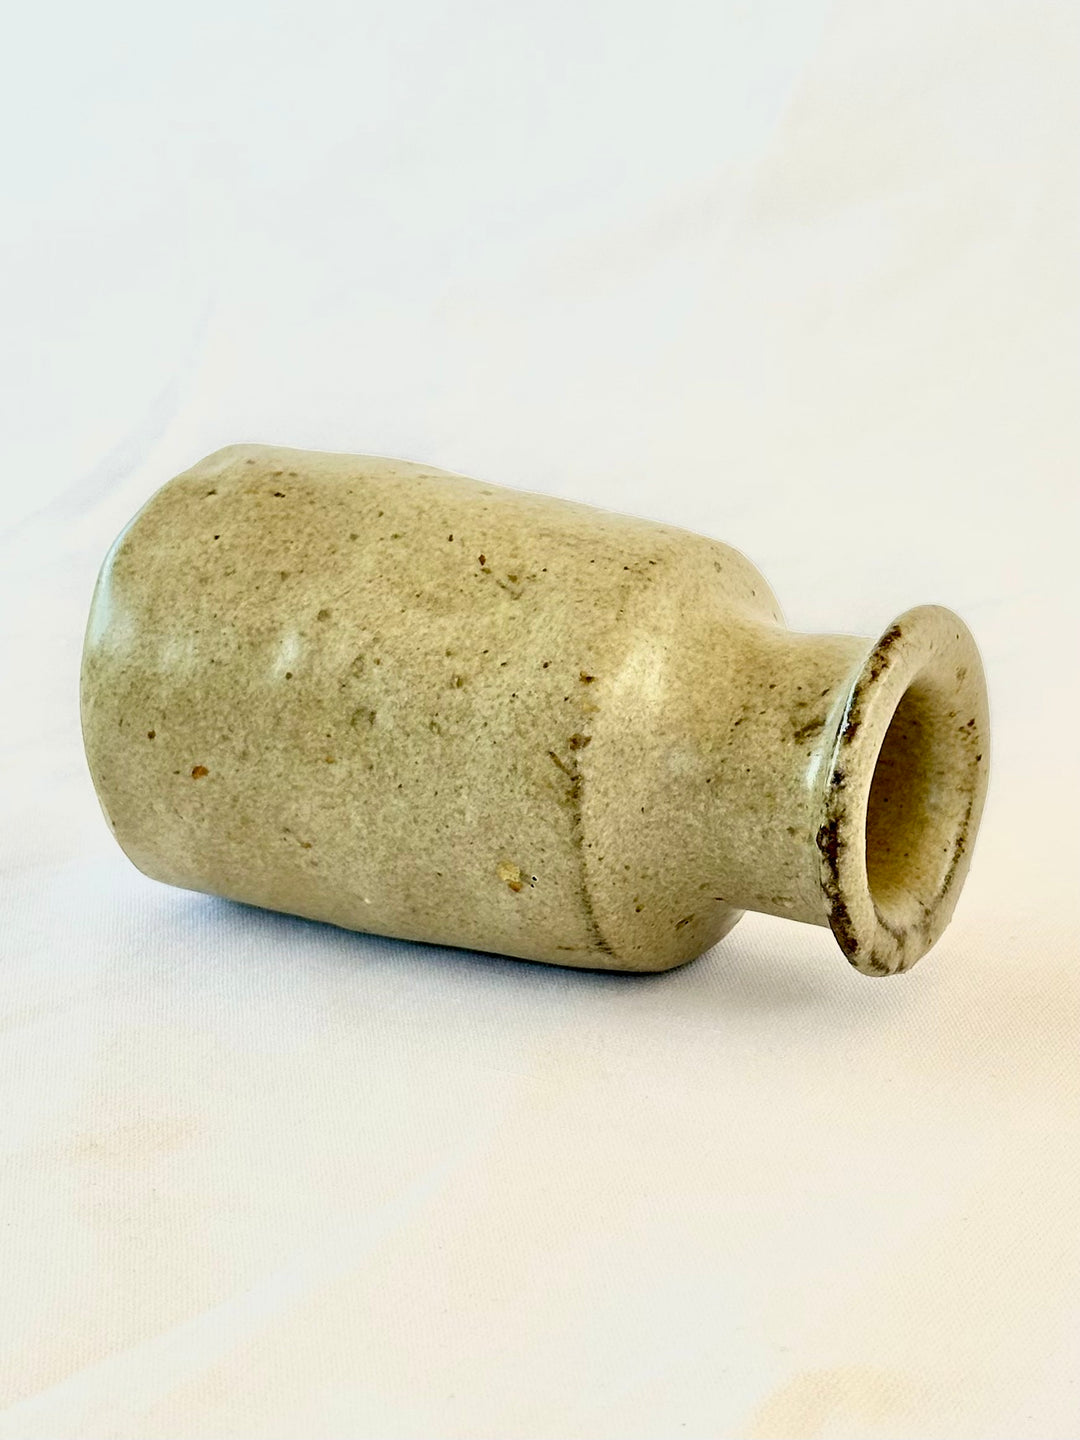 Small Handmade Ceramic Vase